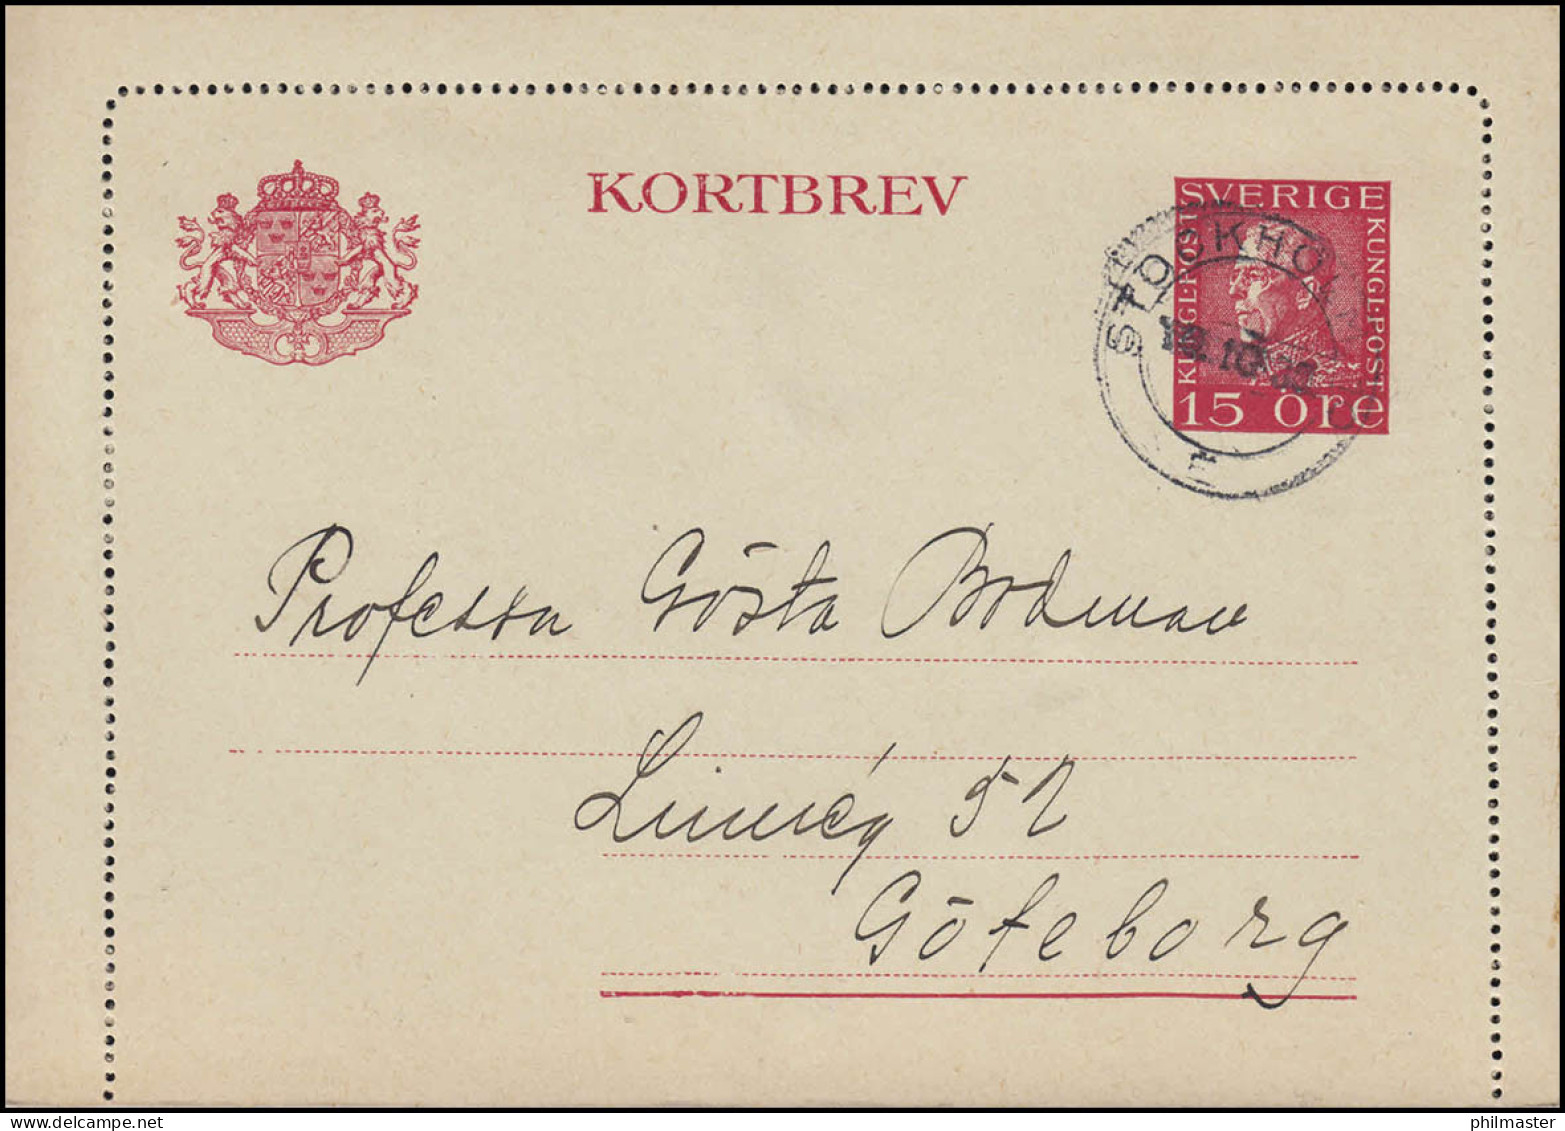 Kartenbrief K 27IW KORTBREV 15 Öre, STOCKHOLM 10.10.1930 Nach Göteborg - Postal Stationery